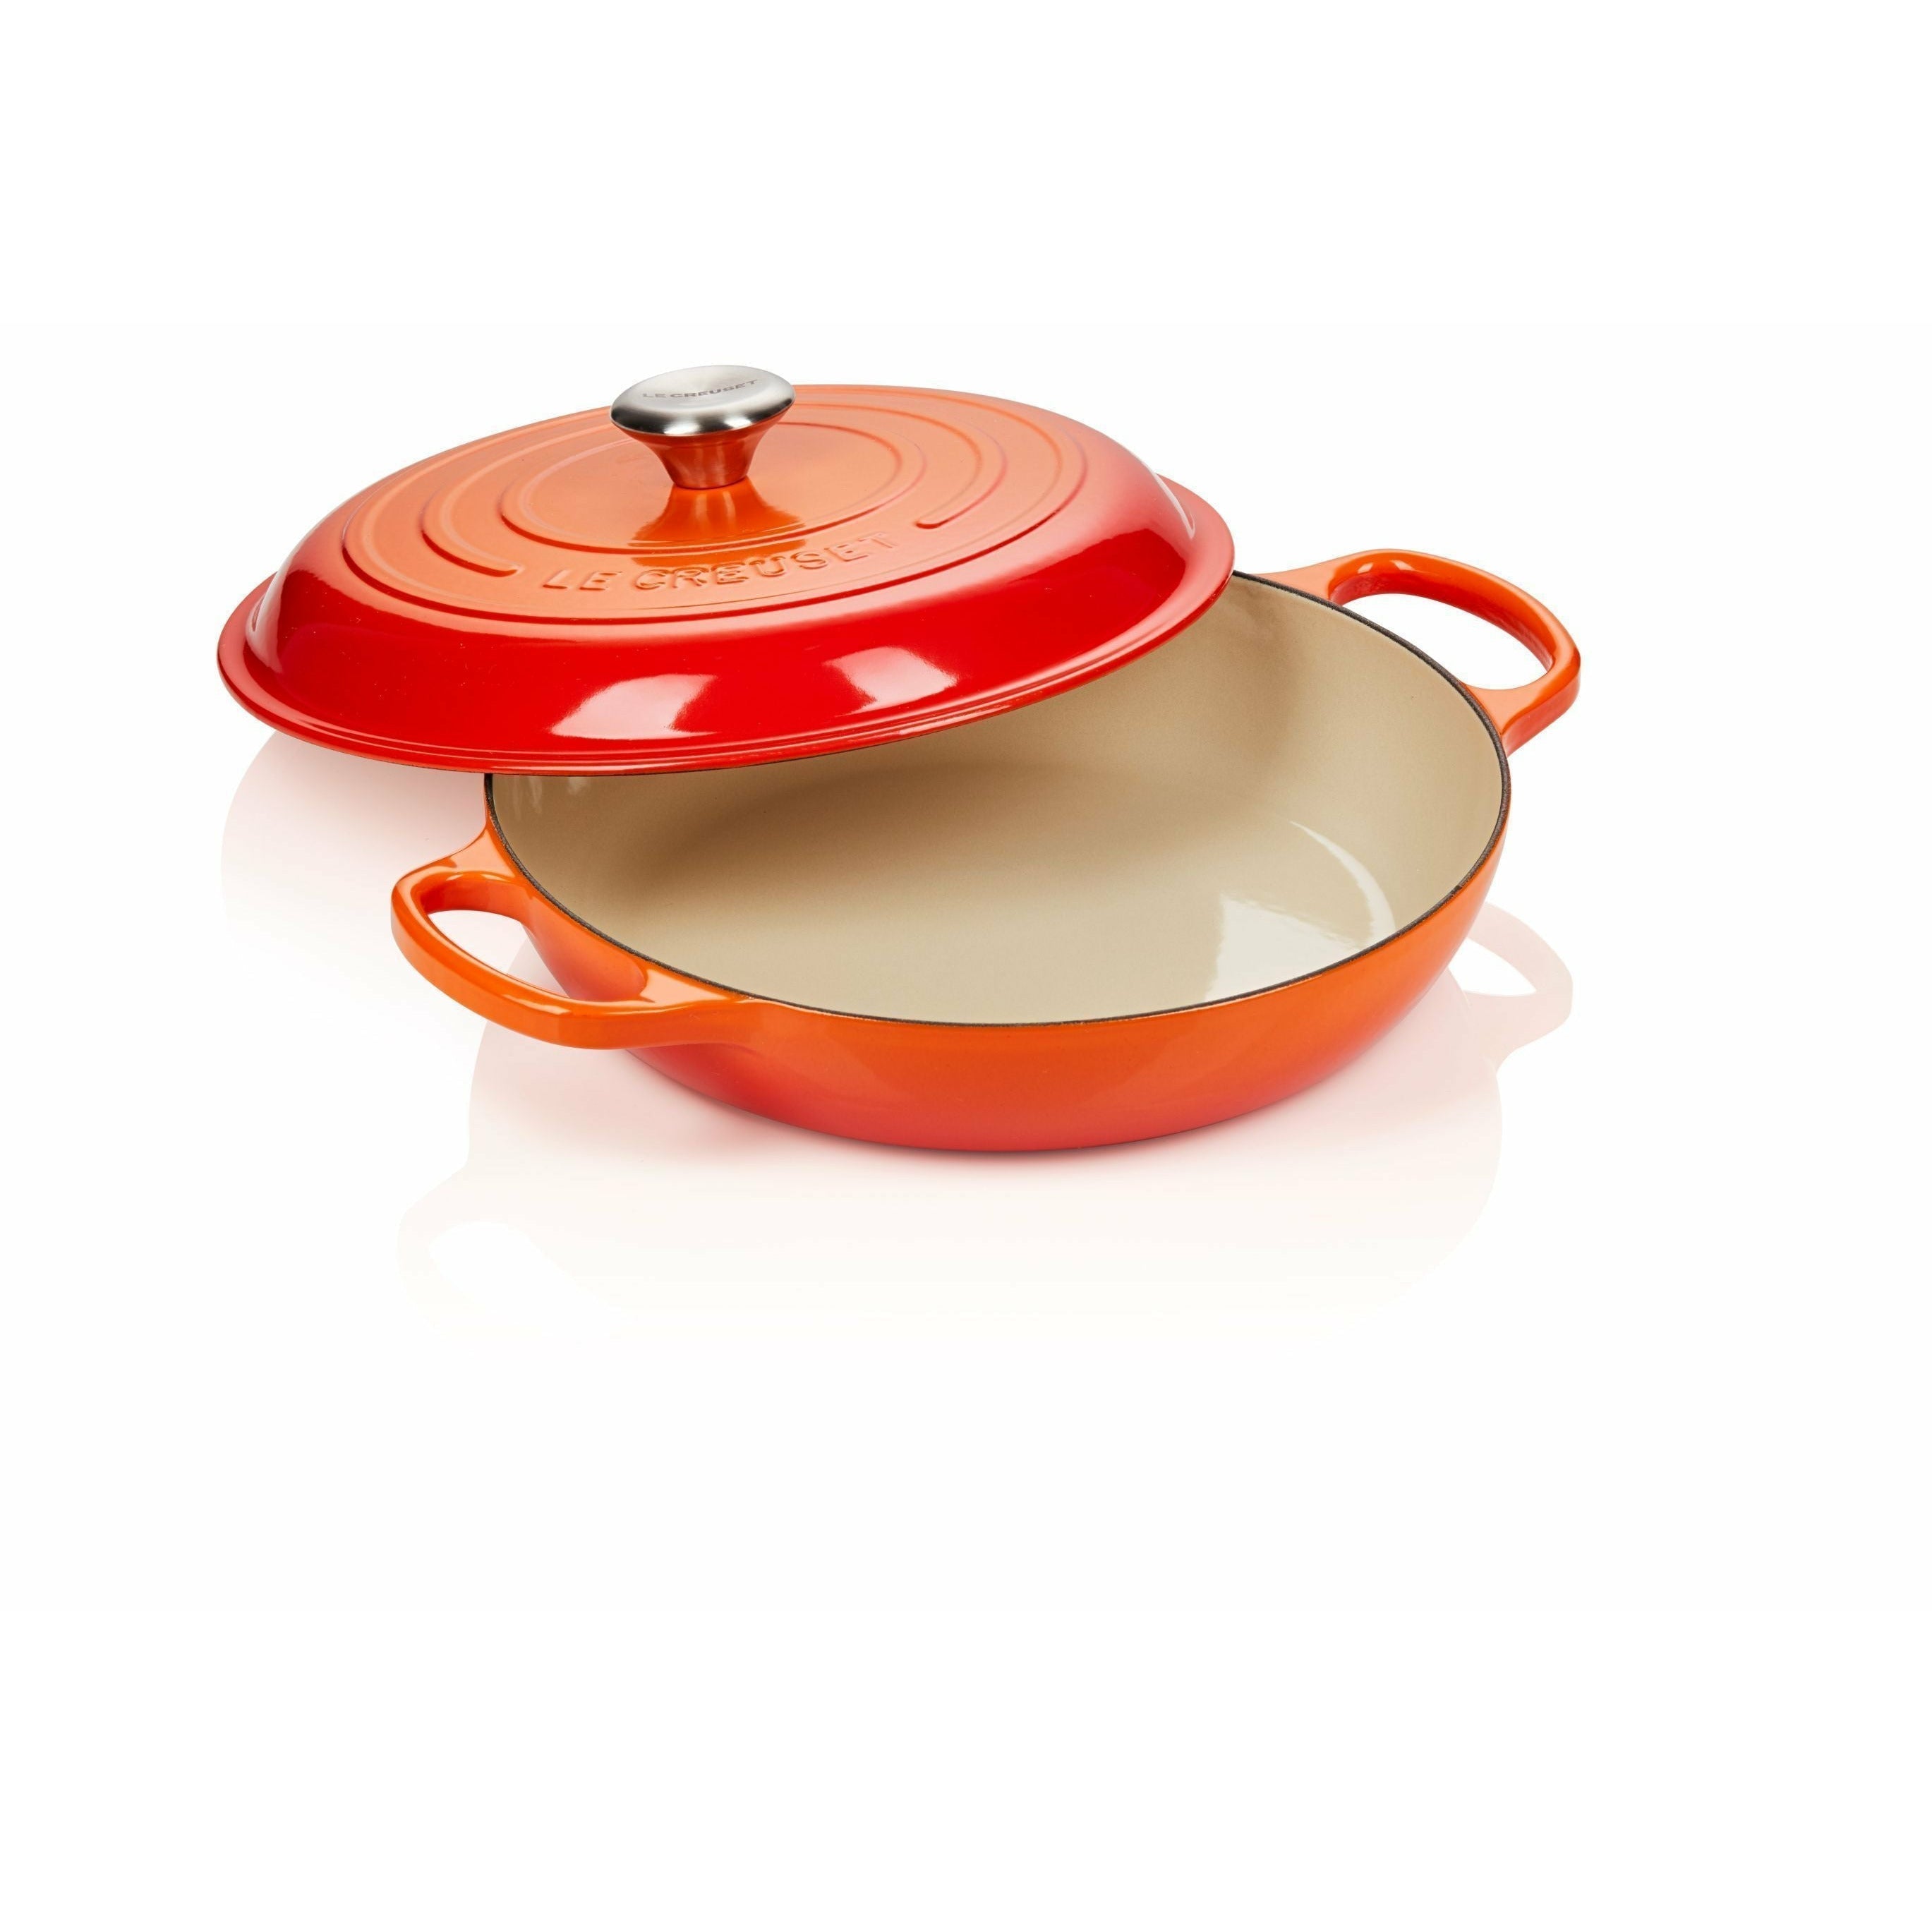 Le Creuset Signature Gourmet Professional Pot 30 Cm, Oven Red